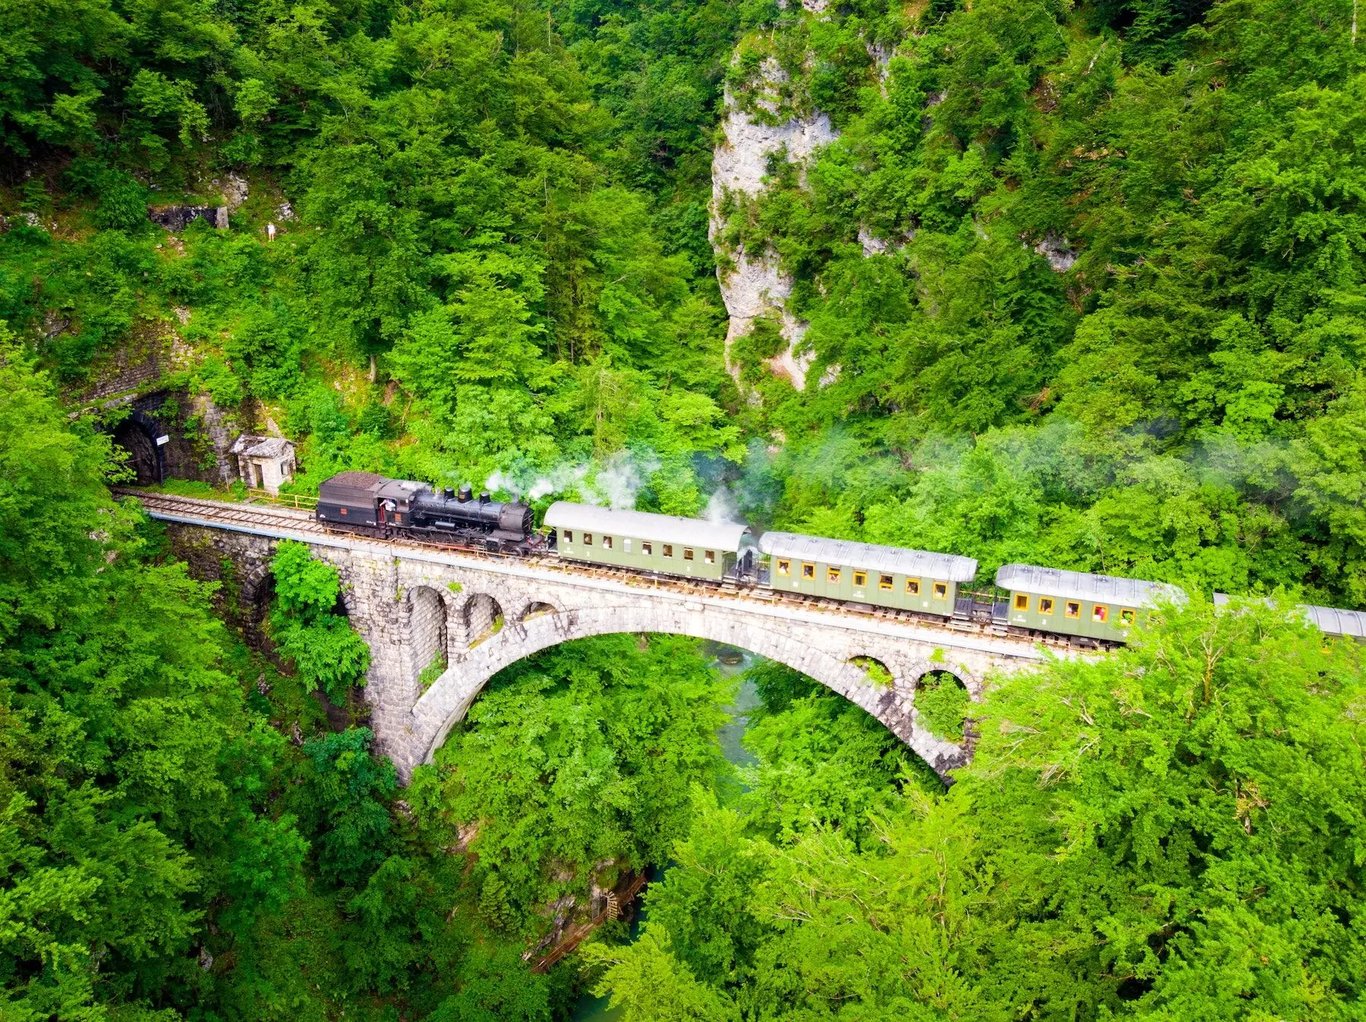 Bohinj Nostalgia Train - The most beautiful railway in Slovenia